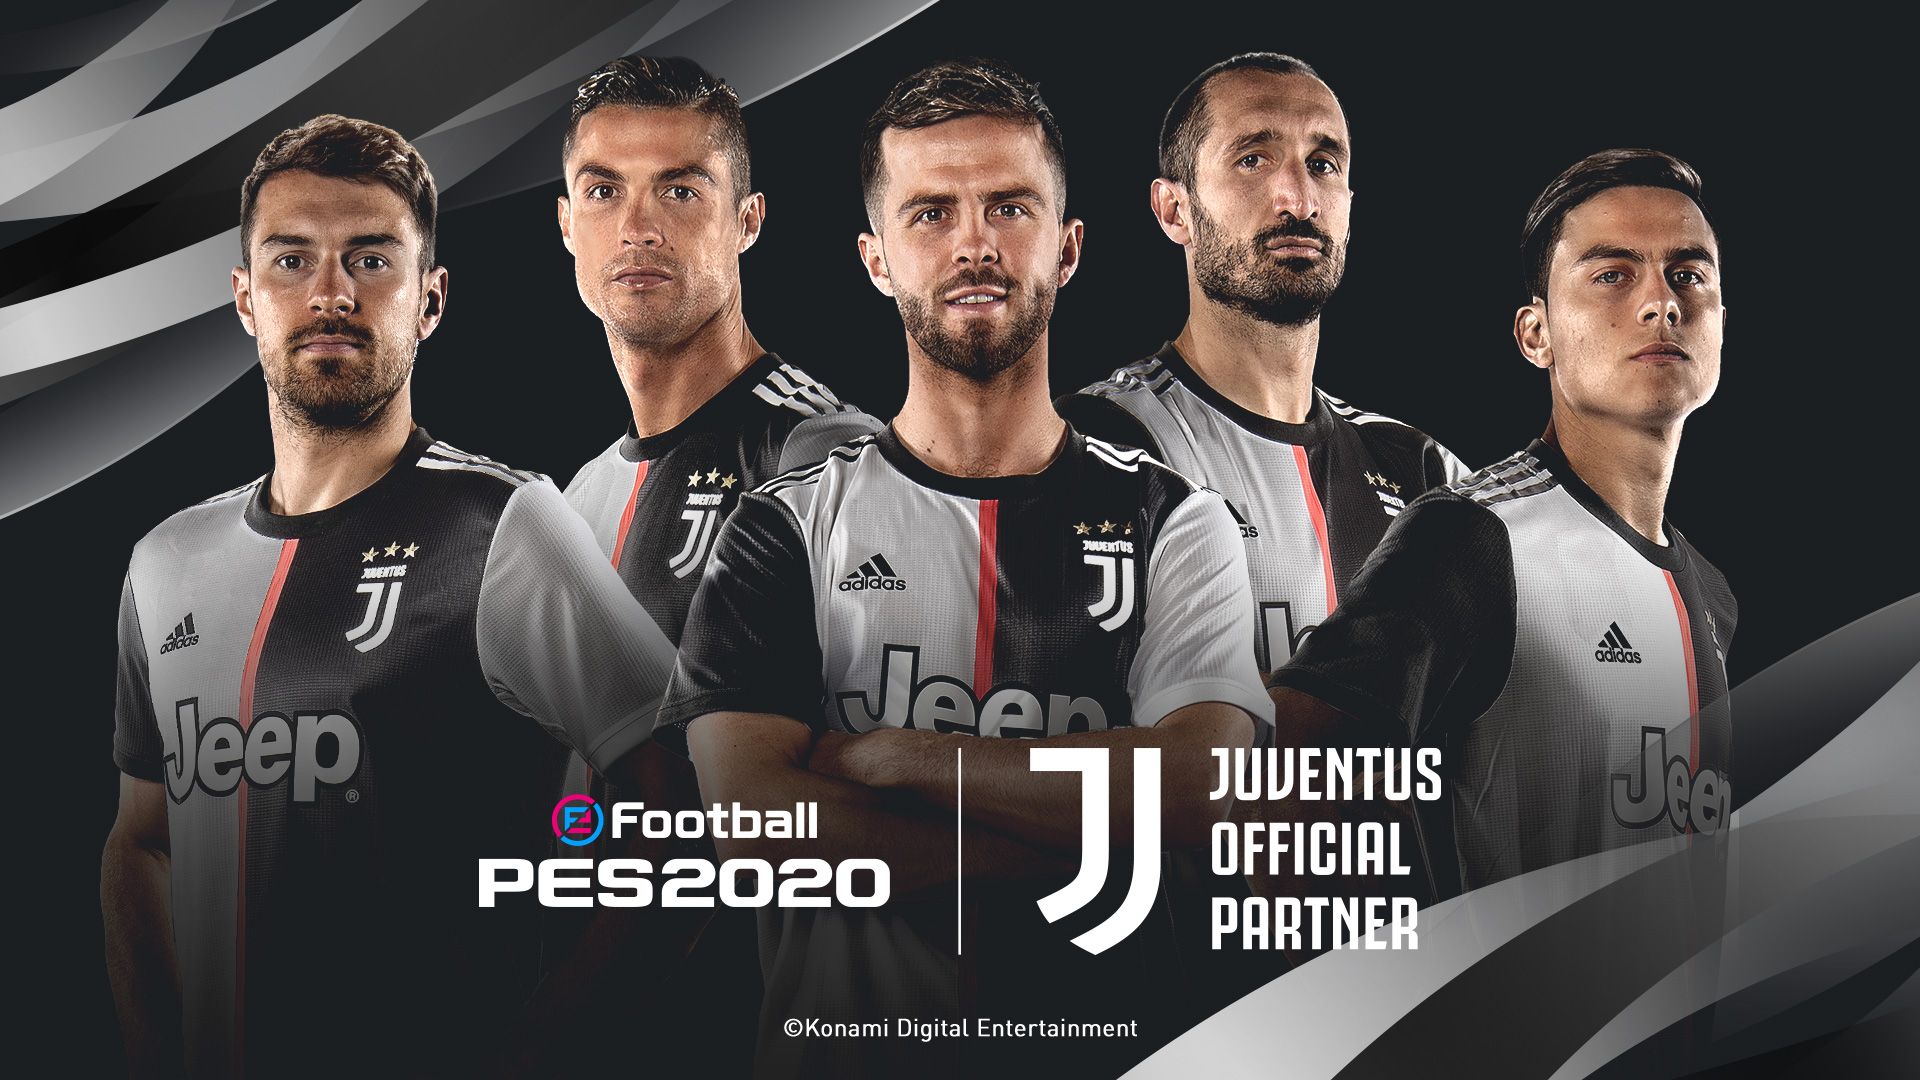 Juventus Official Partnership. PES PES 2020